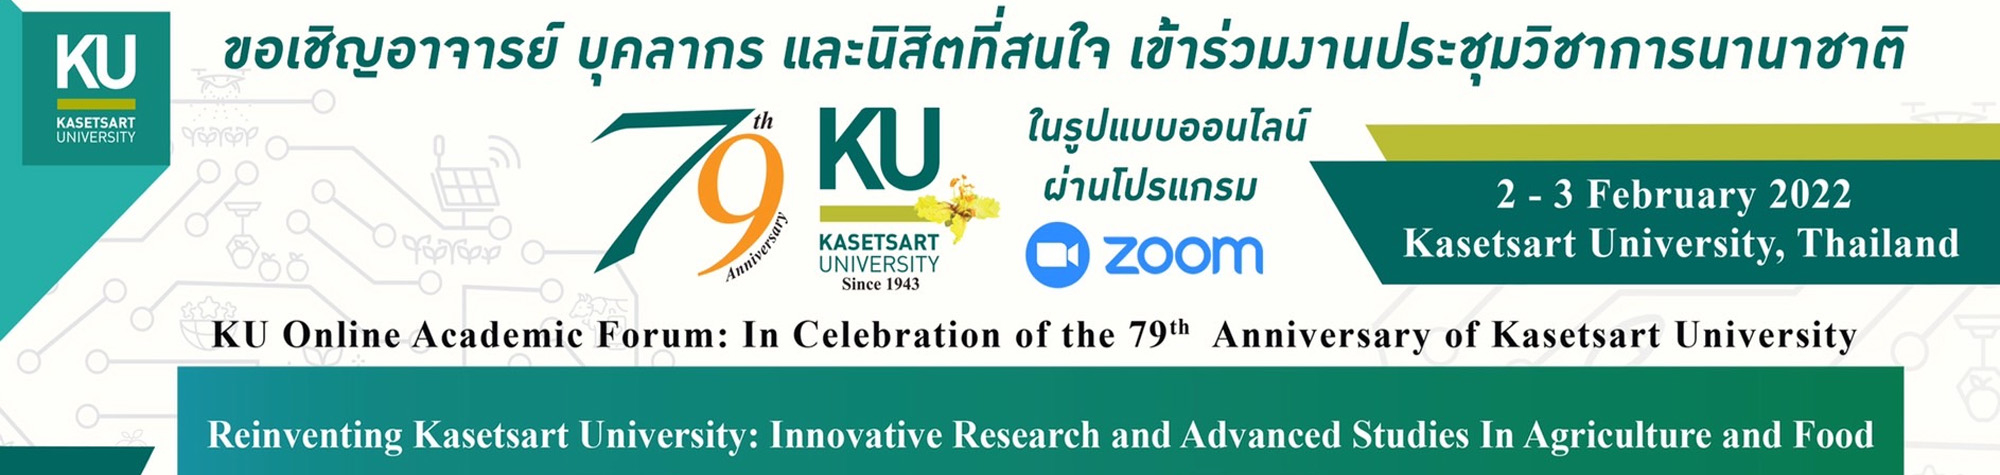 KU Online International Academic Forum 2022 (79th Anniversary)